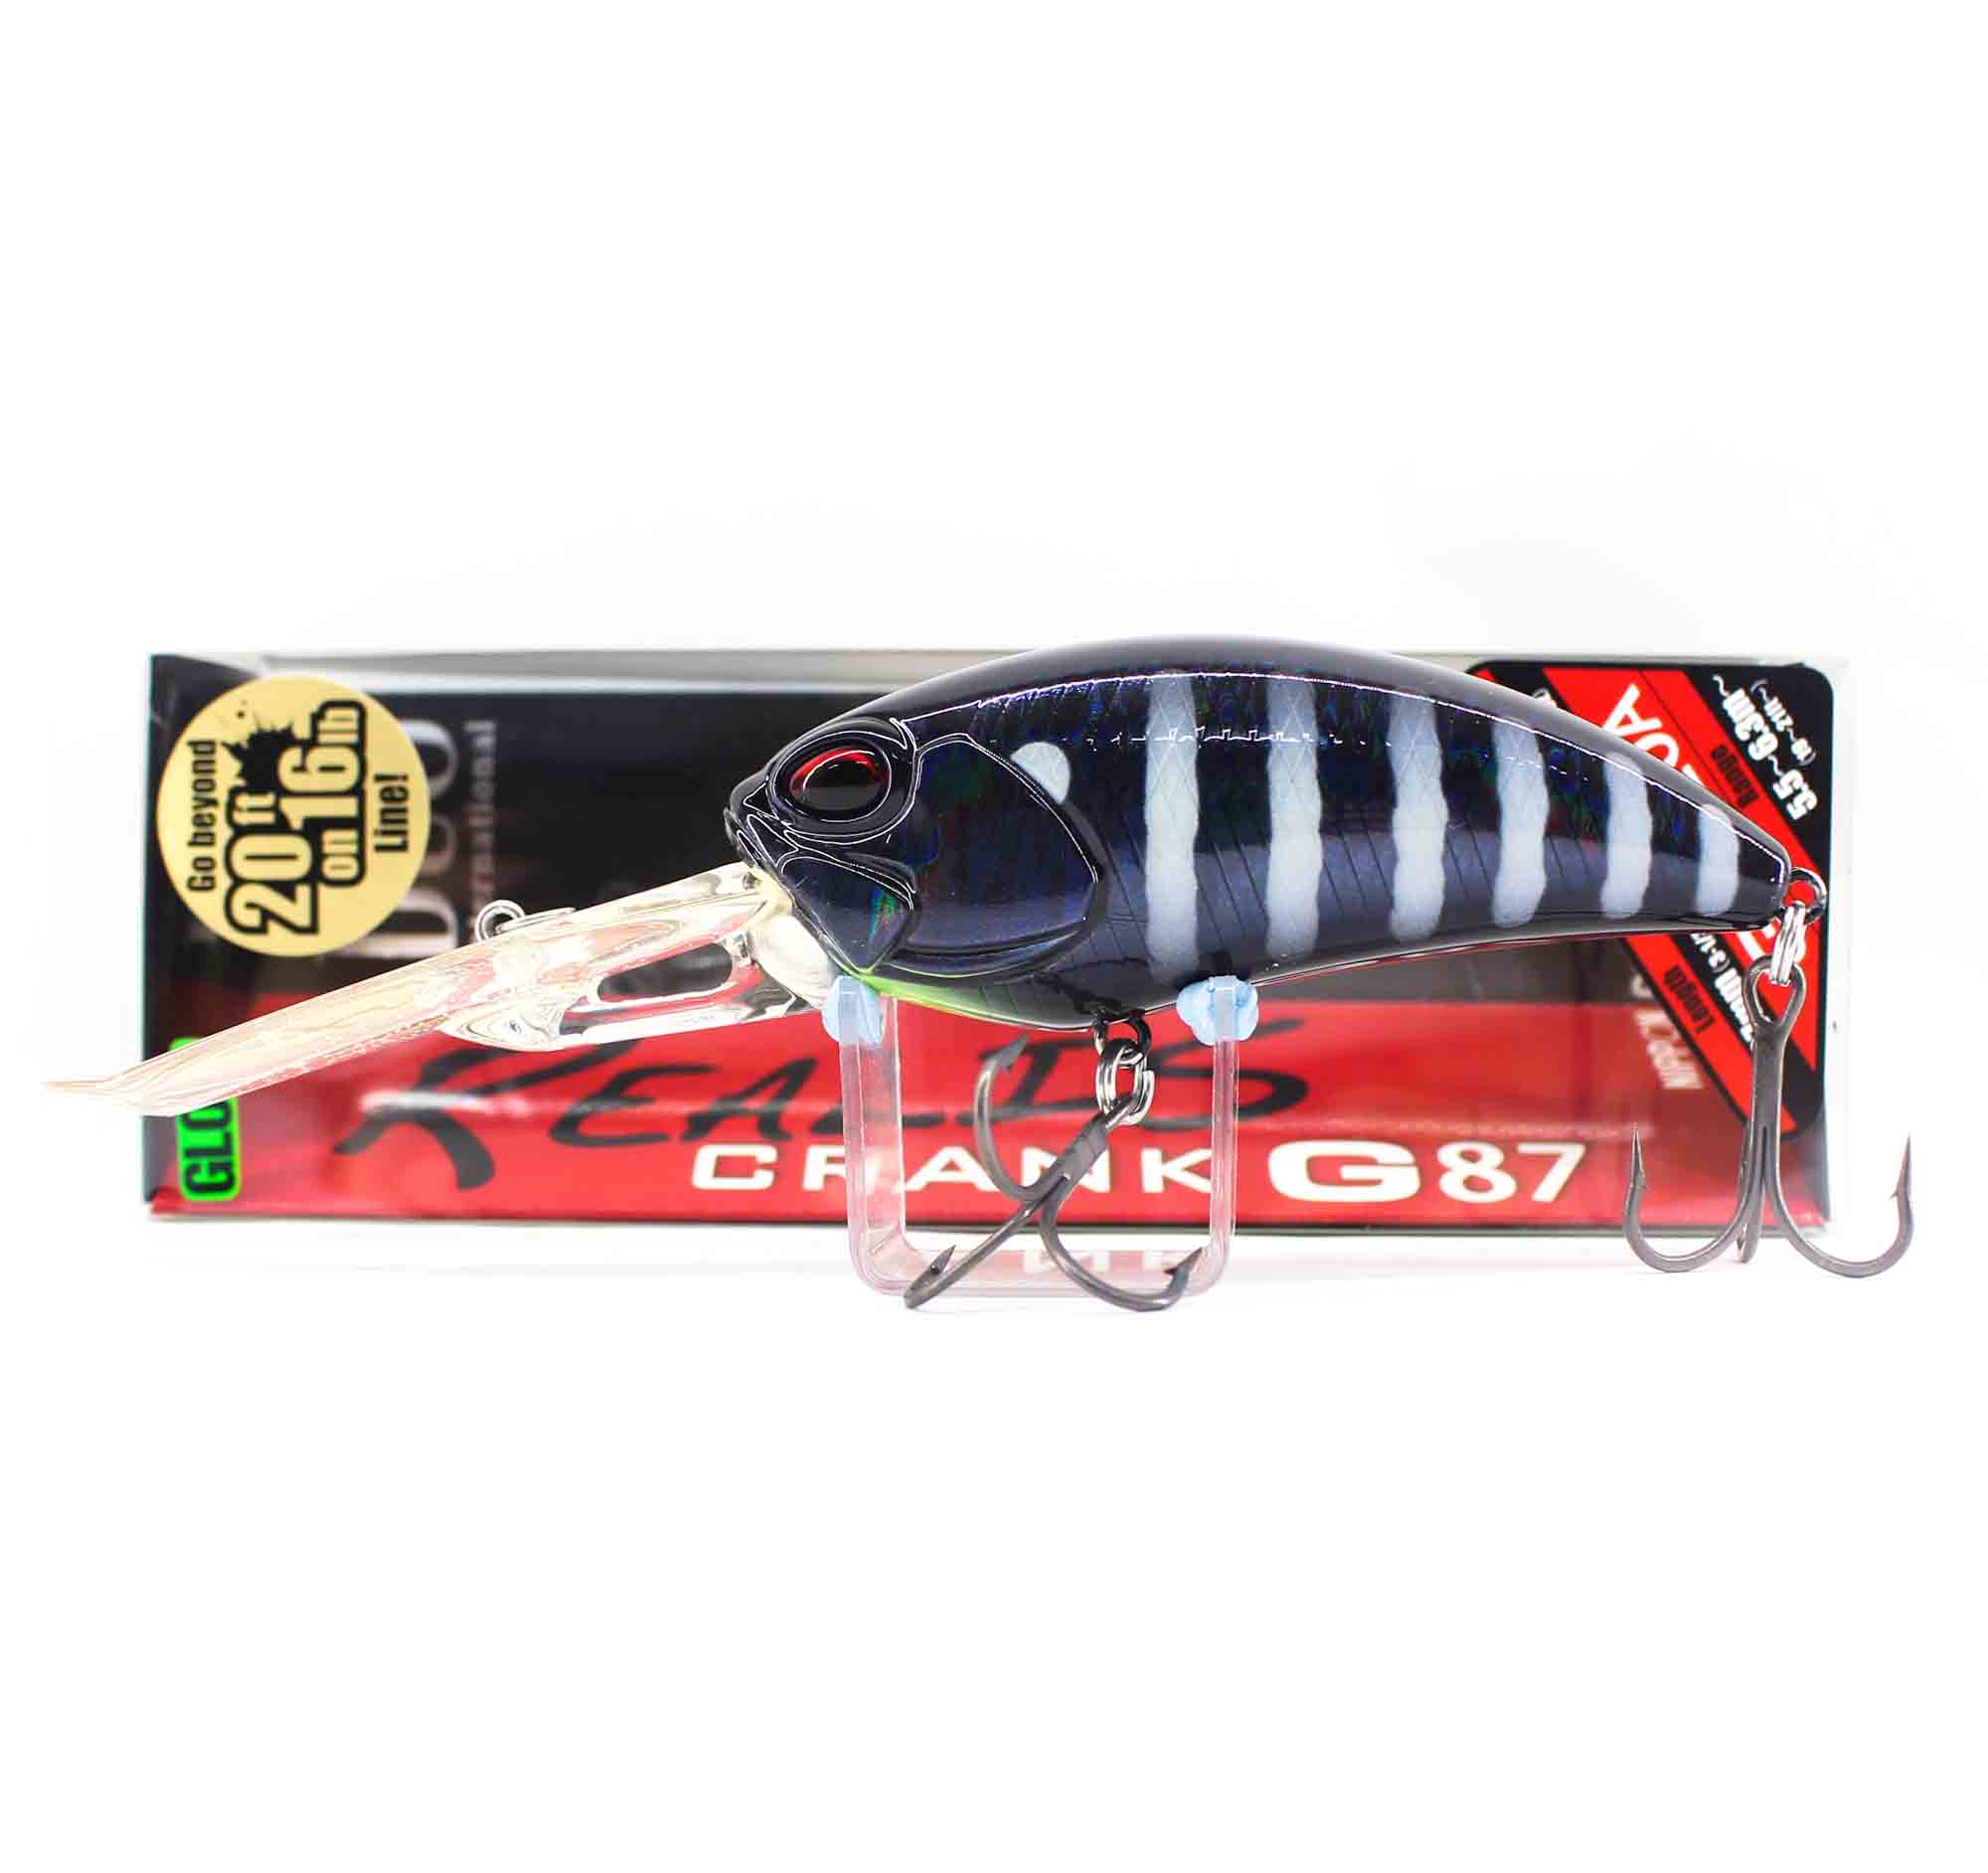 DUO Realis Crank G87 20a Deep Crank Bait Floating Lure Acc3126-5124 for sale online 